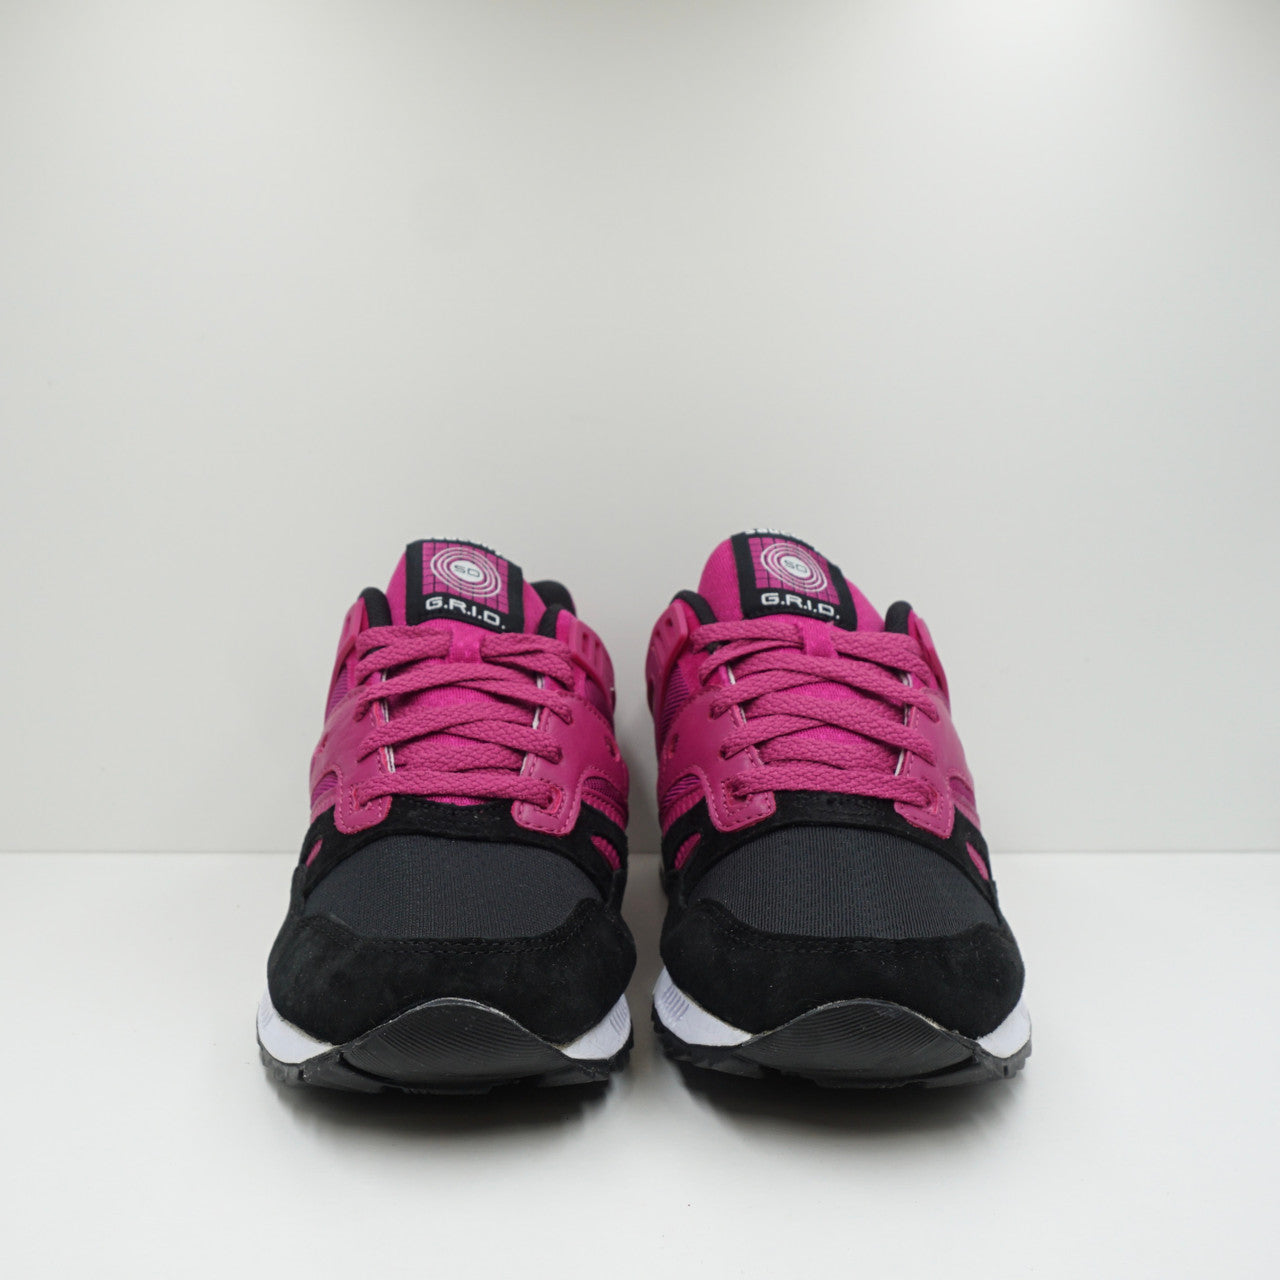 Saucony Grid Sd Premium Shoes Berry/Black Sample